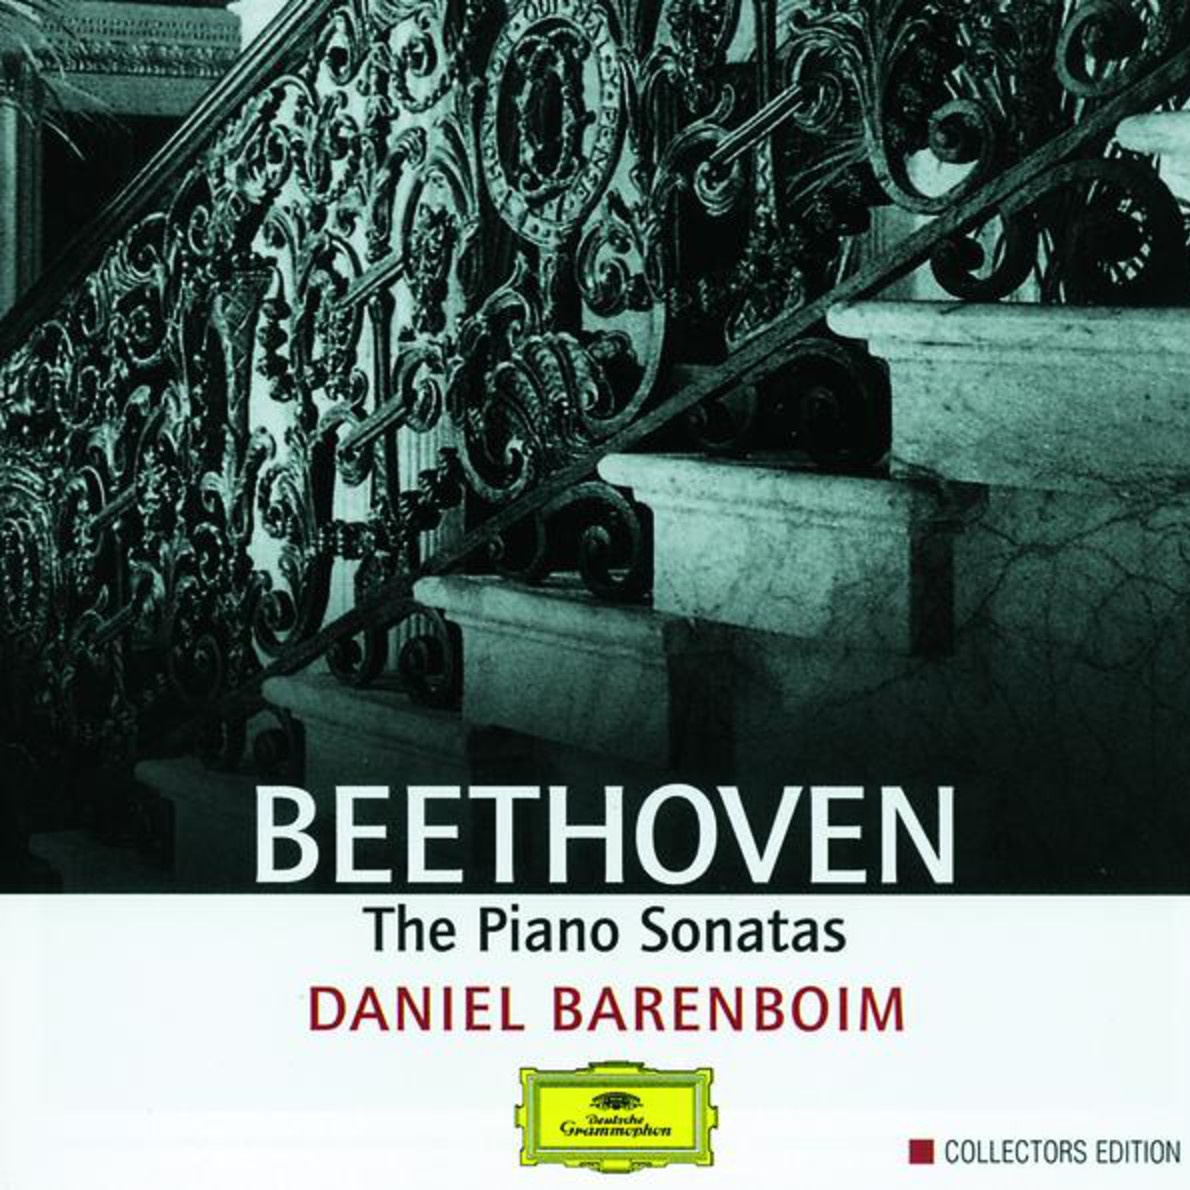 Beethoven: Piano Sonata No.5 in C minor, Op.10 No.1 - 3. Finale (Prestissimo)